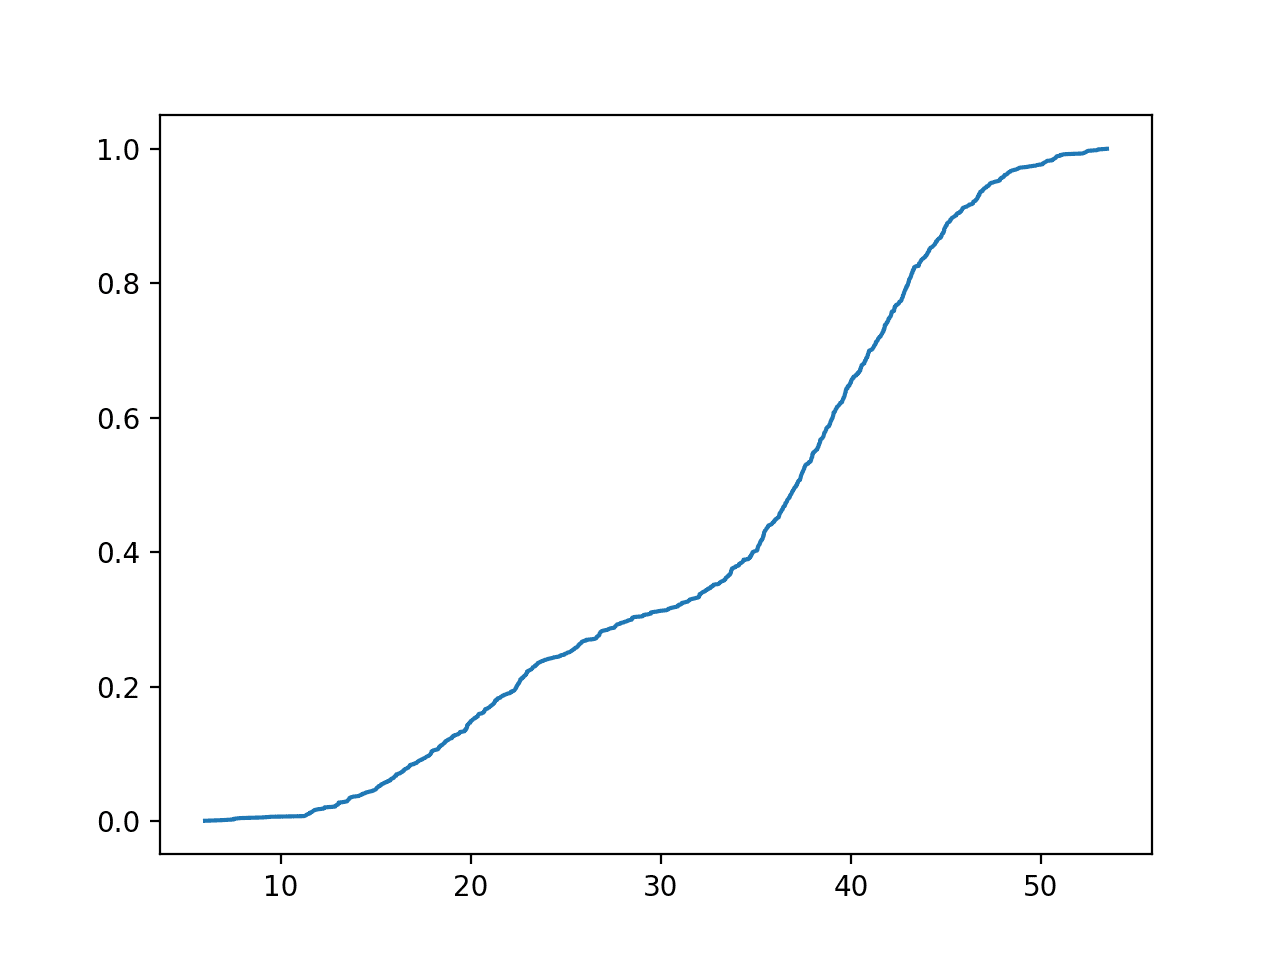 Empirical Cumulative Distribution Function for the Bimodal Data Sample